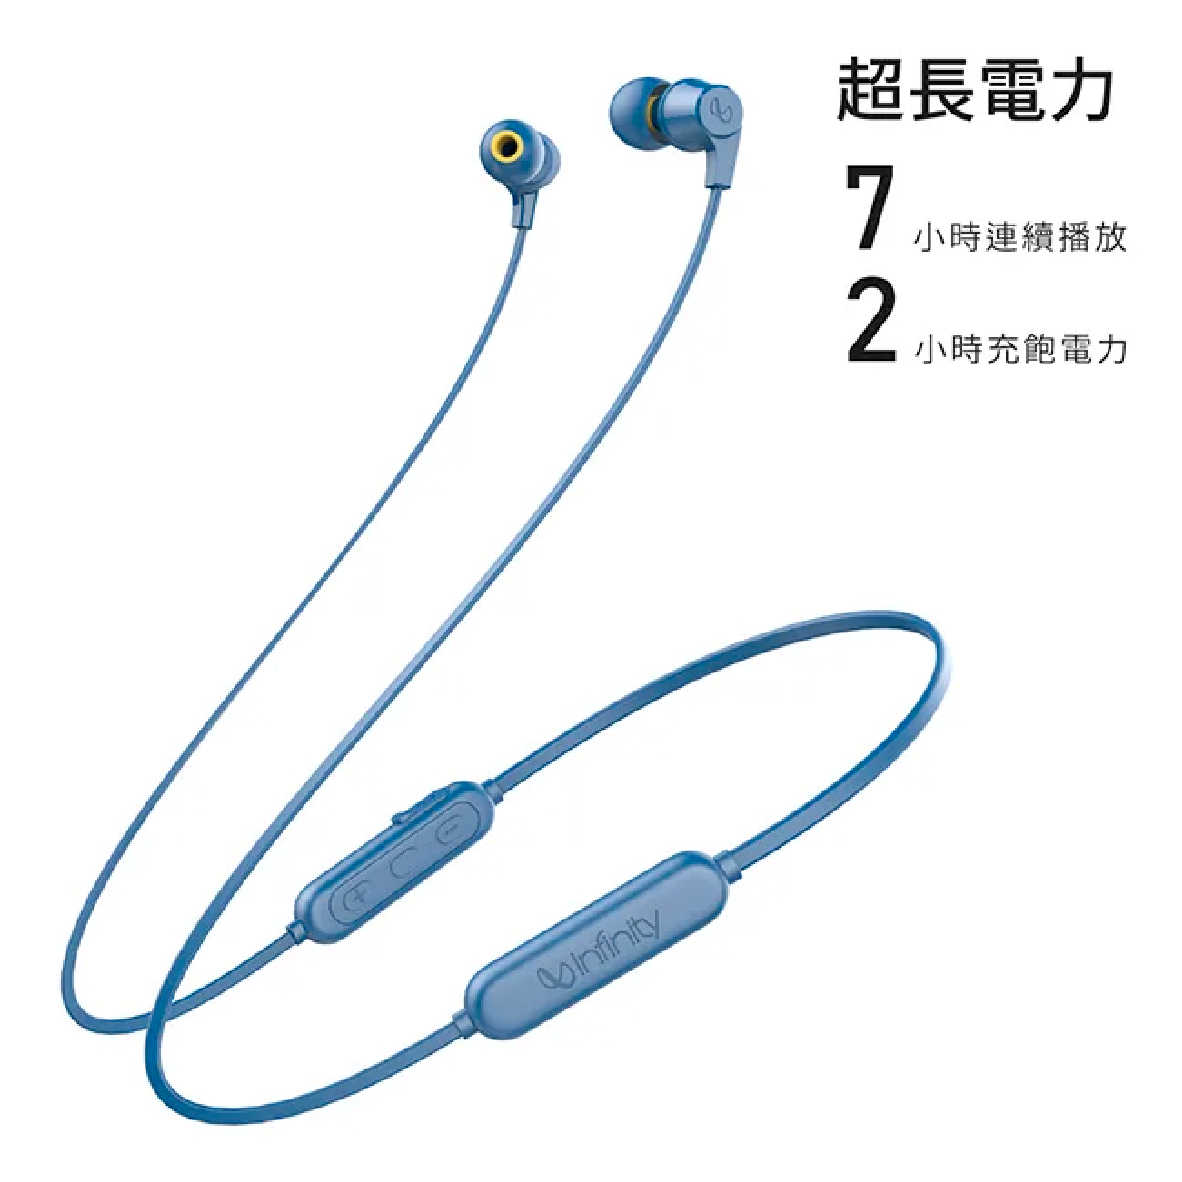 Infinity Tranz 300 IN-EAR系列 IPX5 磁吸式 無線 藍牙耳機 | 金曲音響